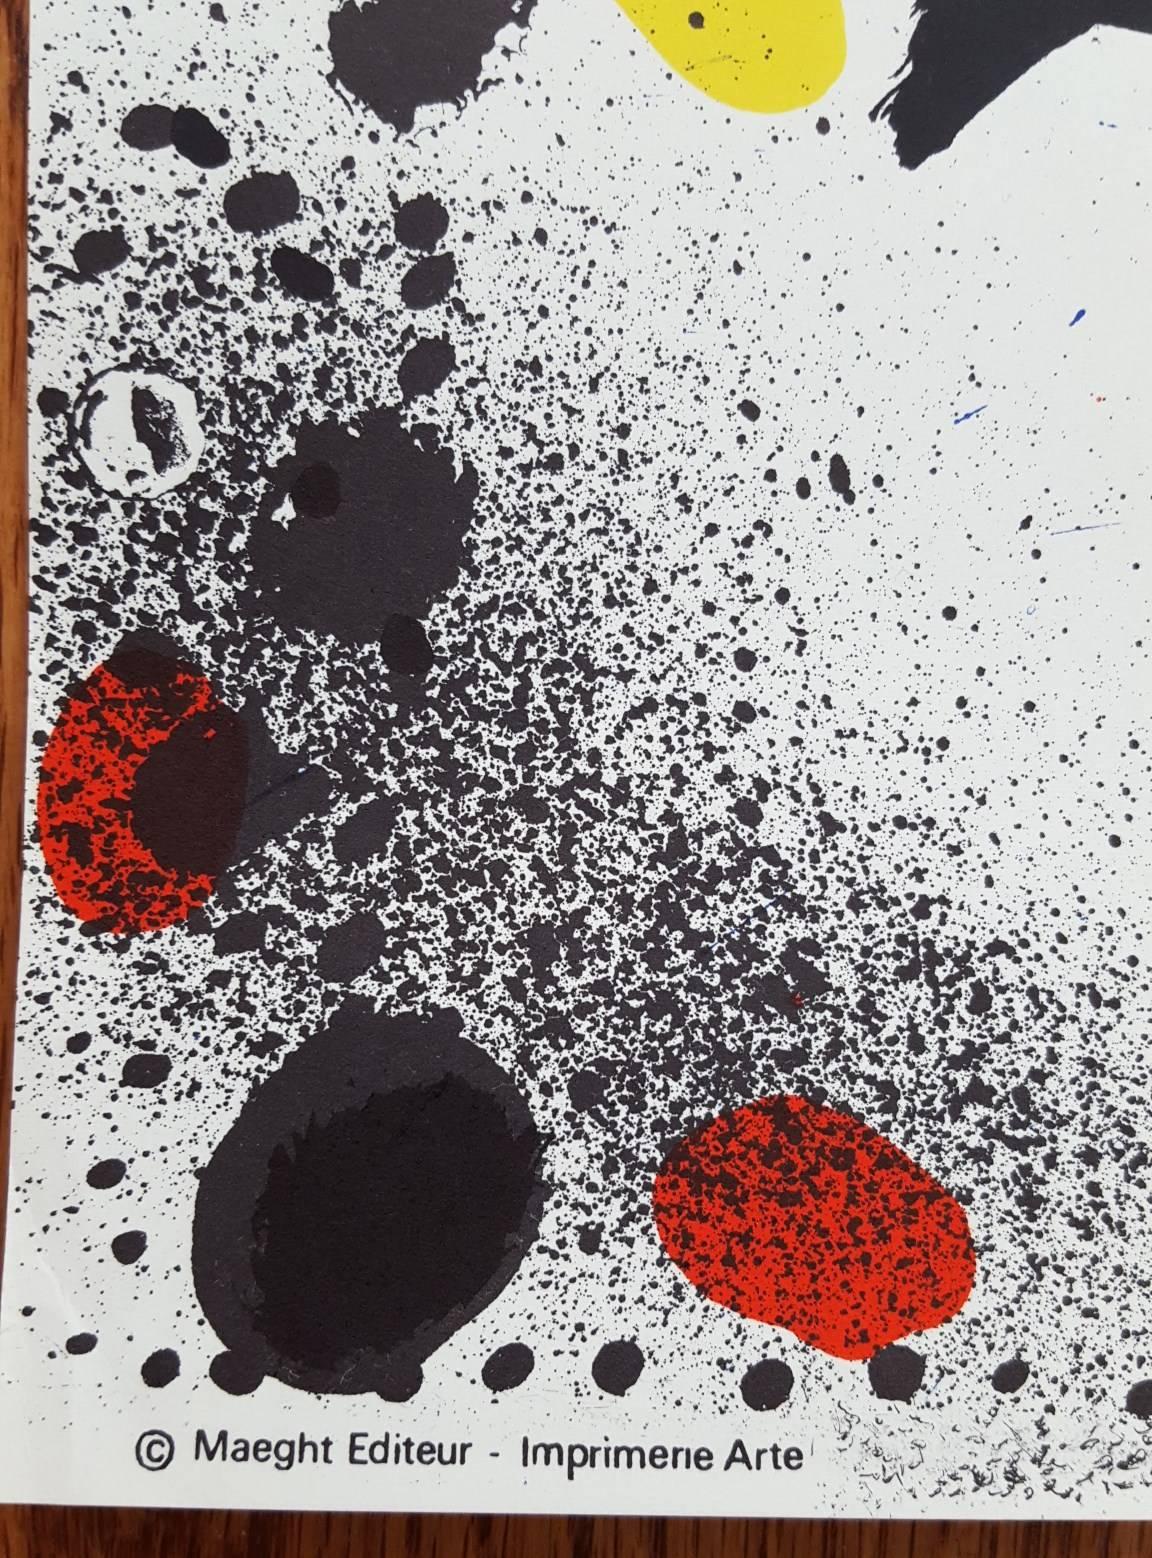 Graphics: Philadelphia Museum of Art - Print by Joan Miró